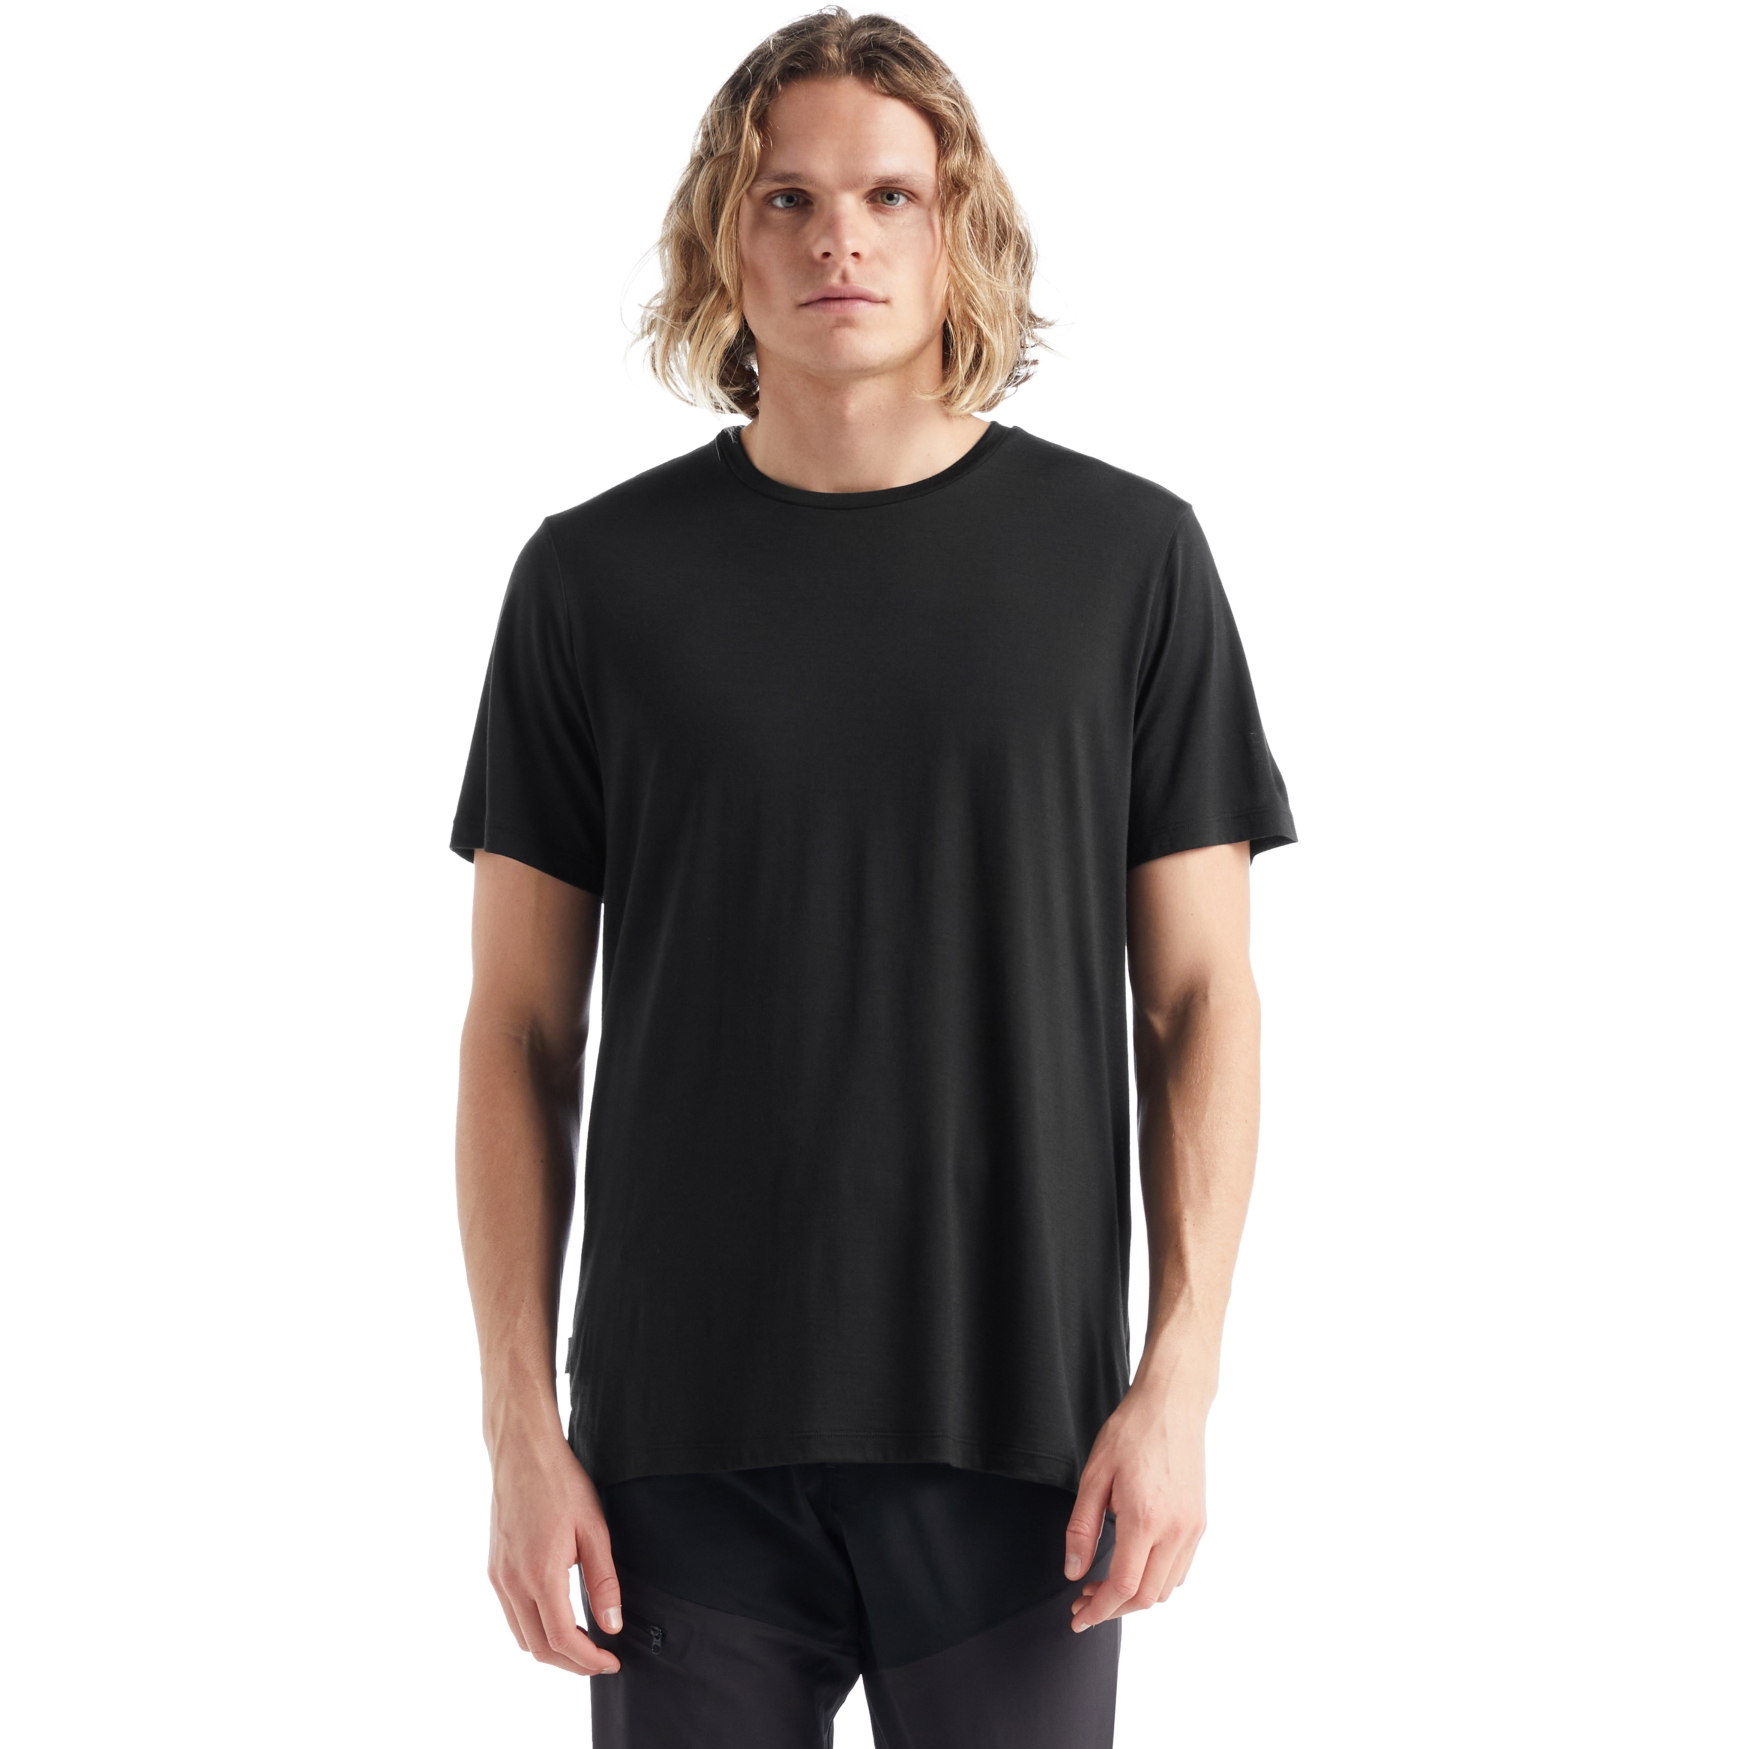 Produktbild von Icebreaker Sphere II Herren T-Shirt - Schwarz